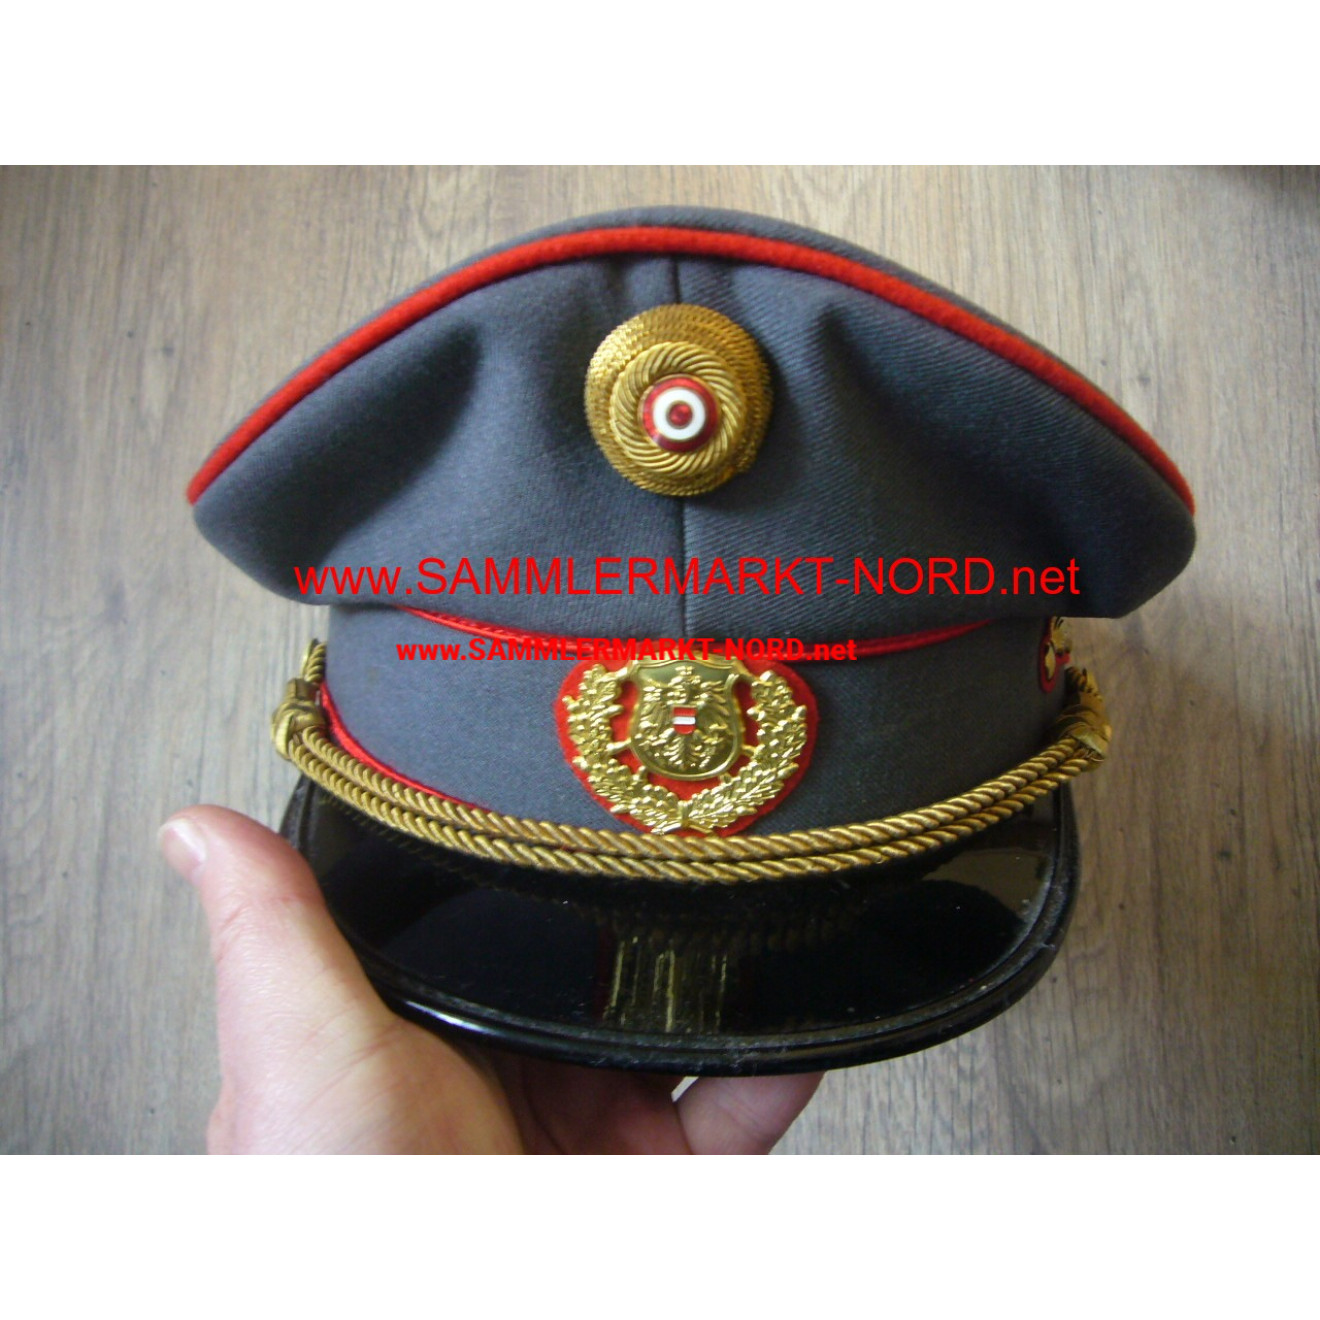 Austria - Visor cap gendamerie / police